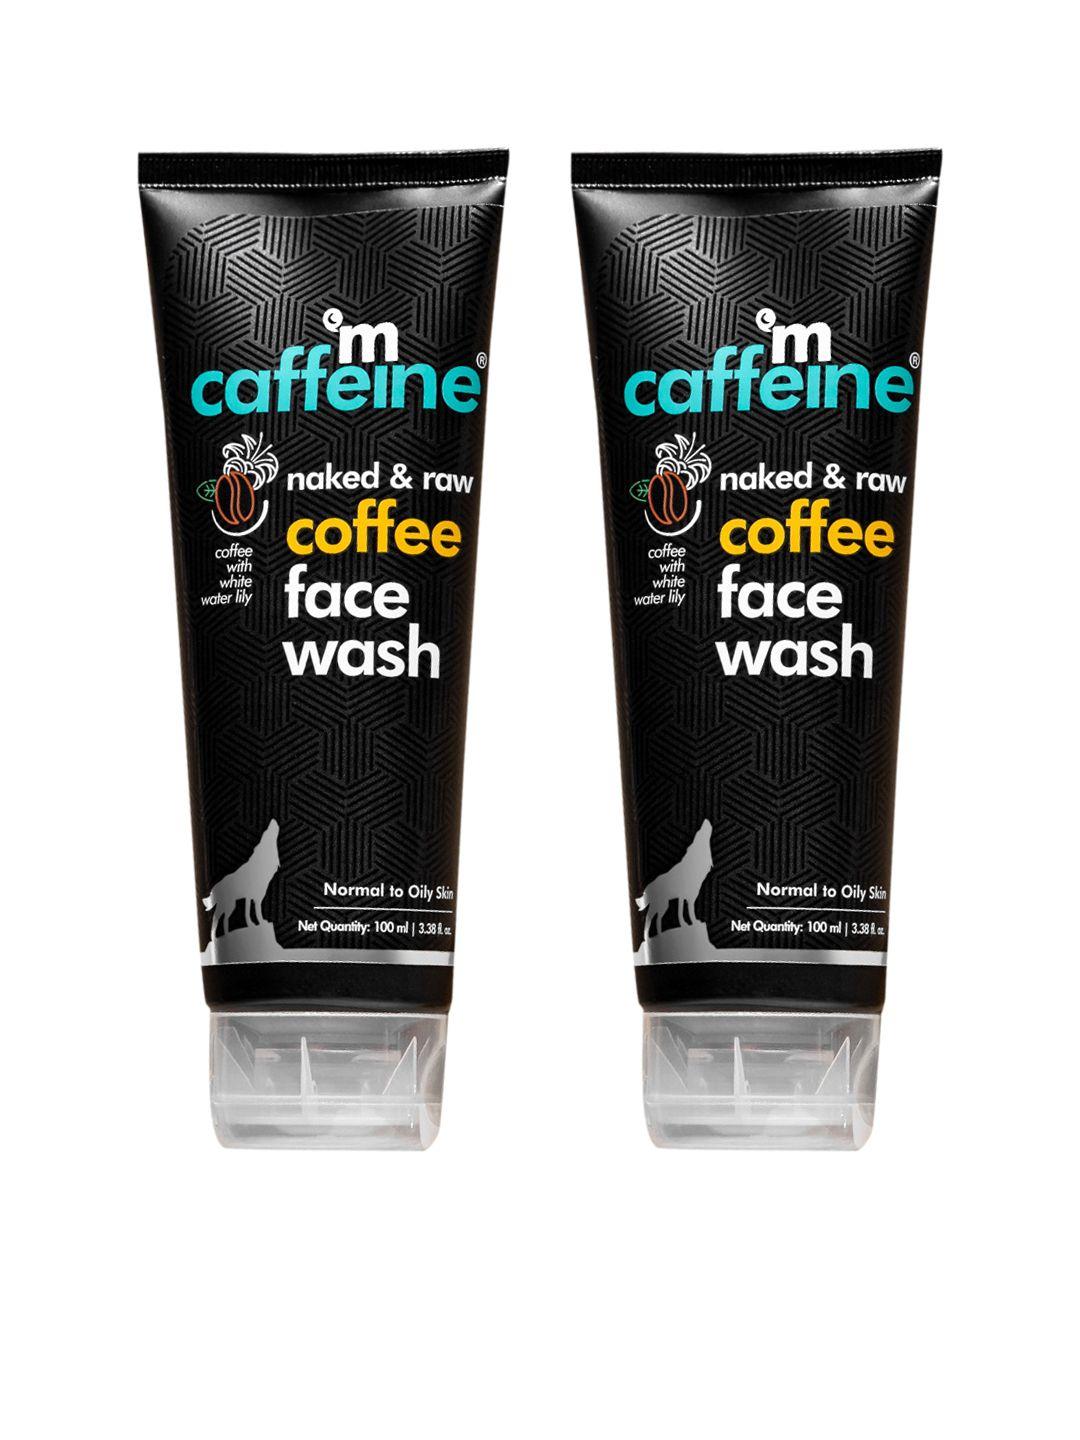 mcaffeine set of 2 coffee face wash for fresh & glowing skin - 100ml each